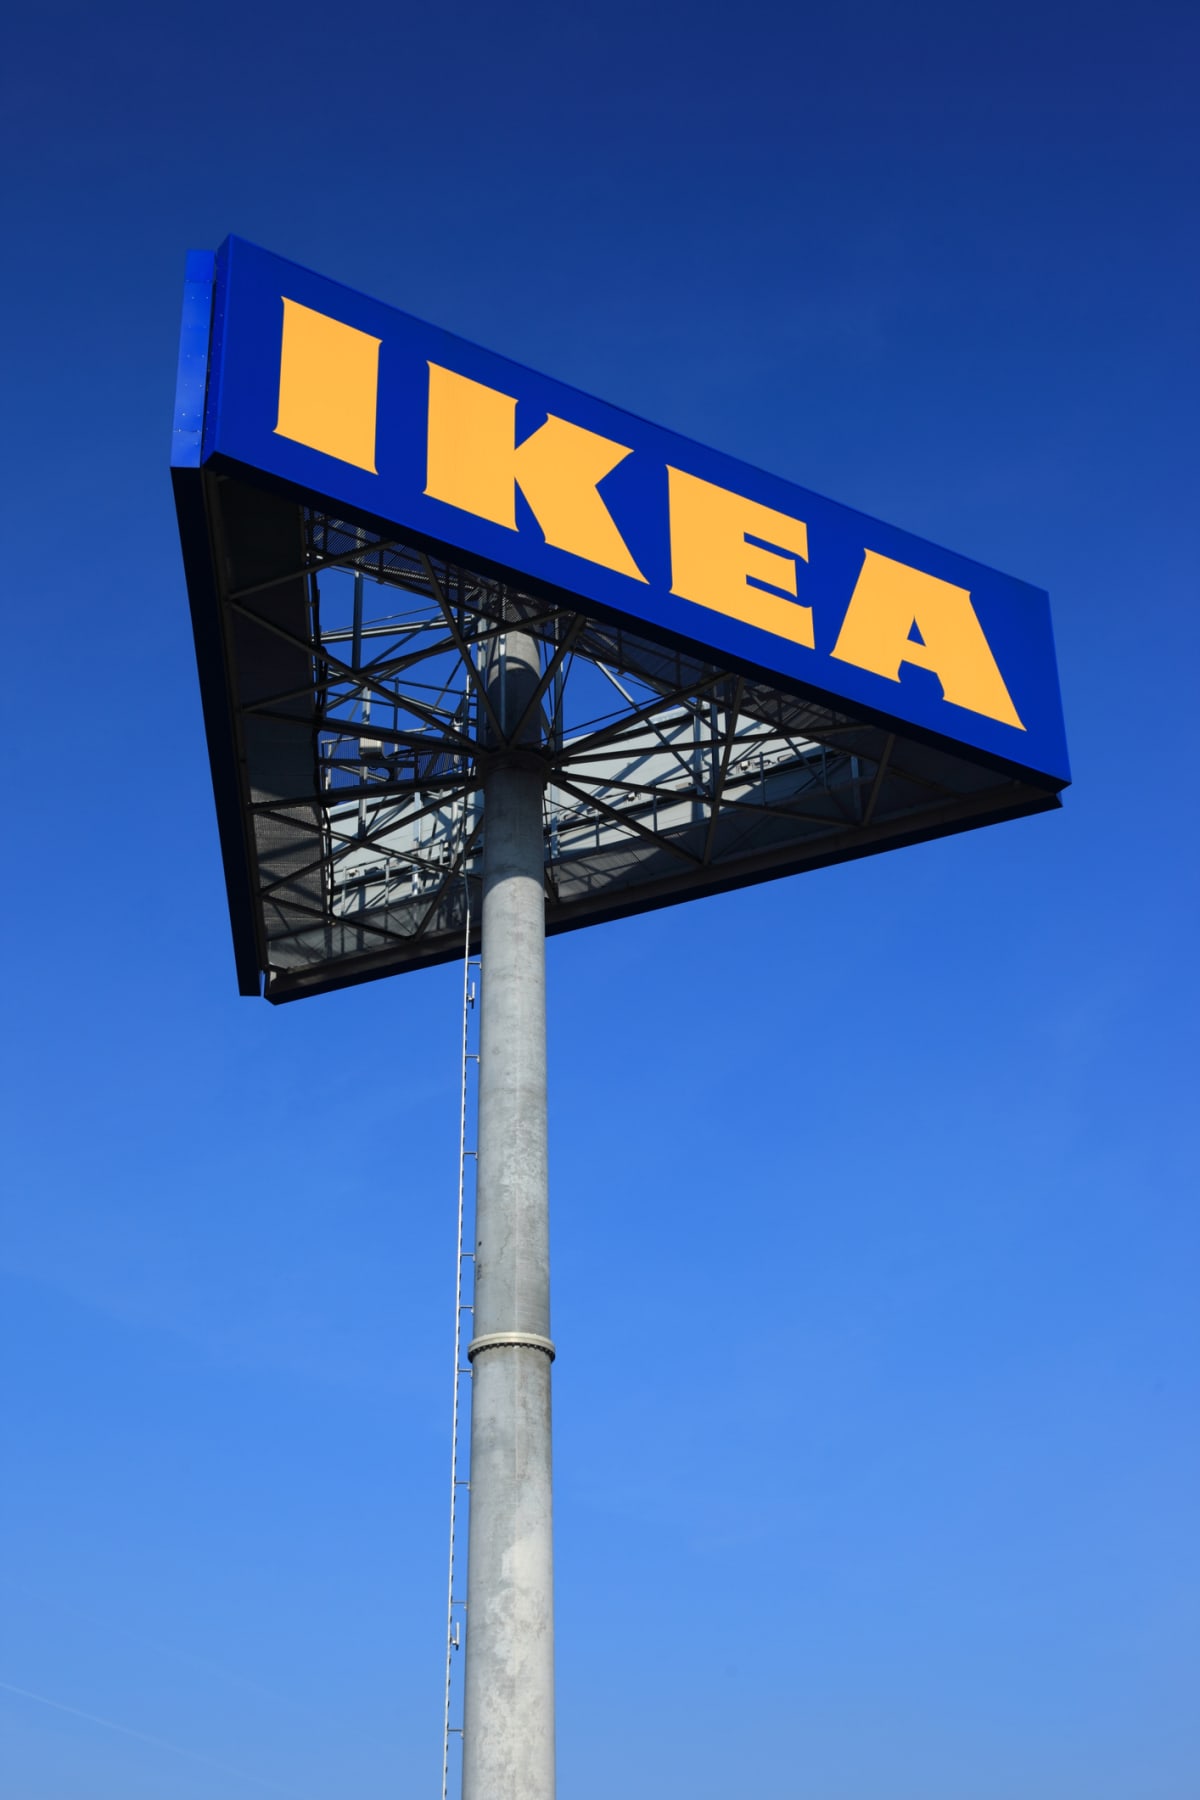 IKEA signage outside the store